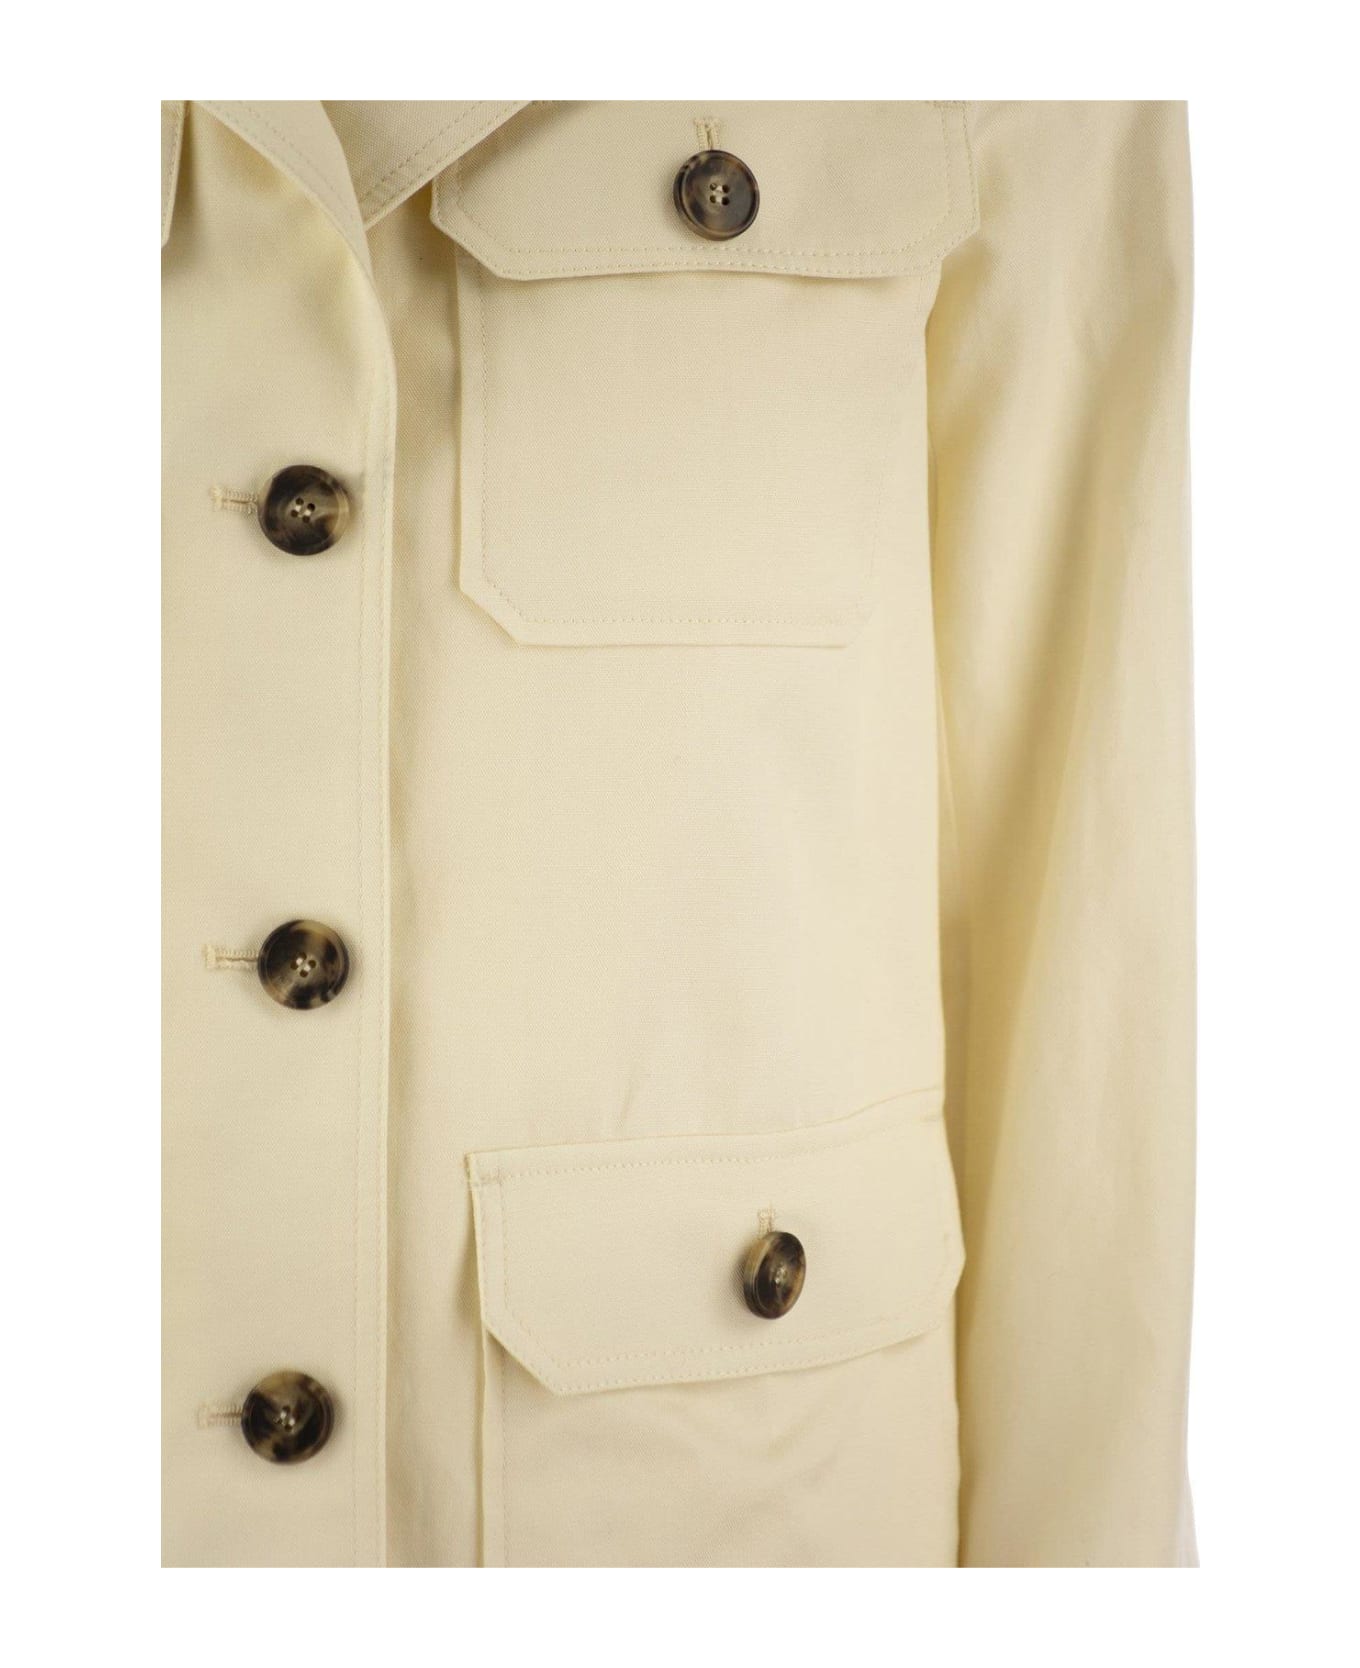 Weekend Max Mara Buttoned Long-sleeved Jacket - Crema